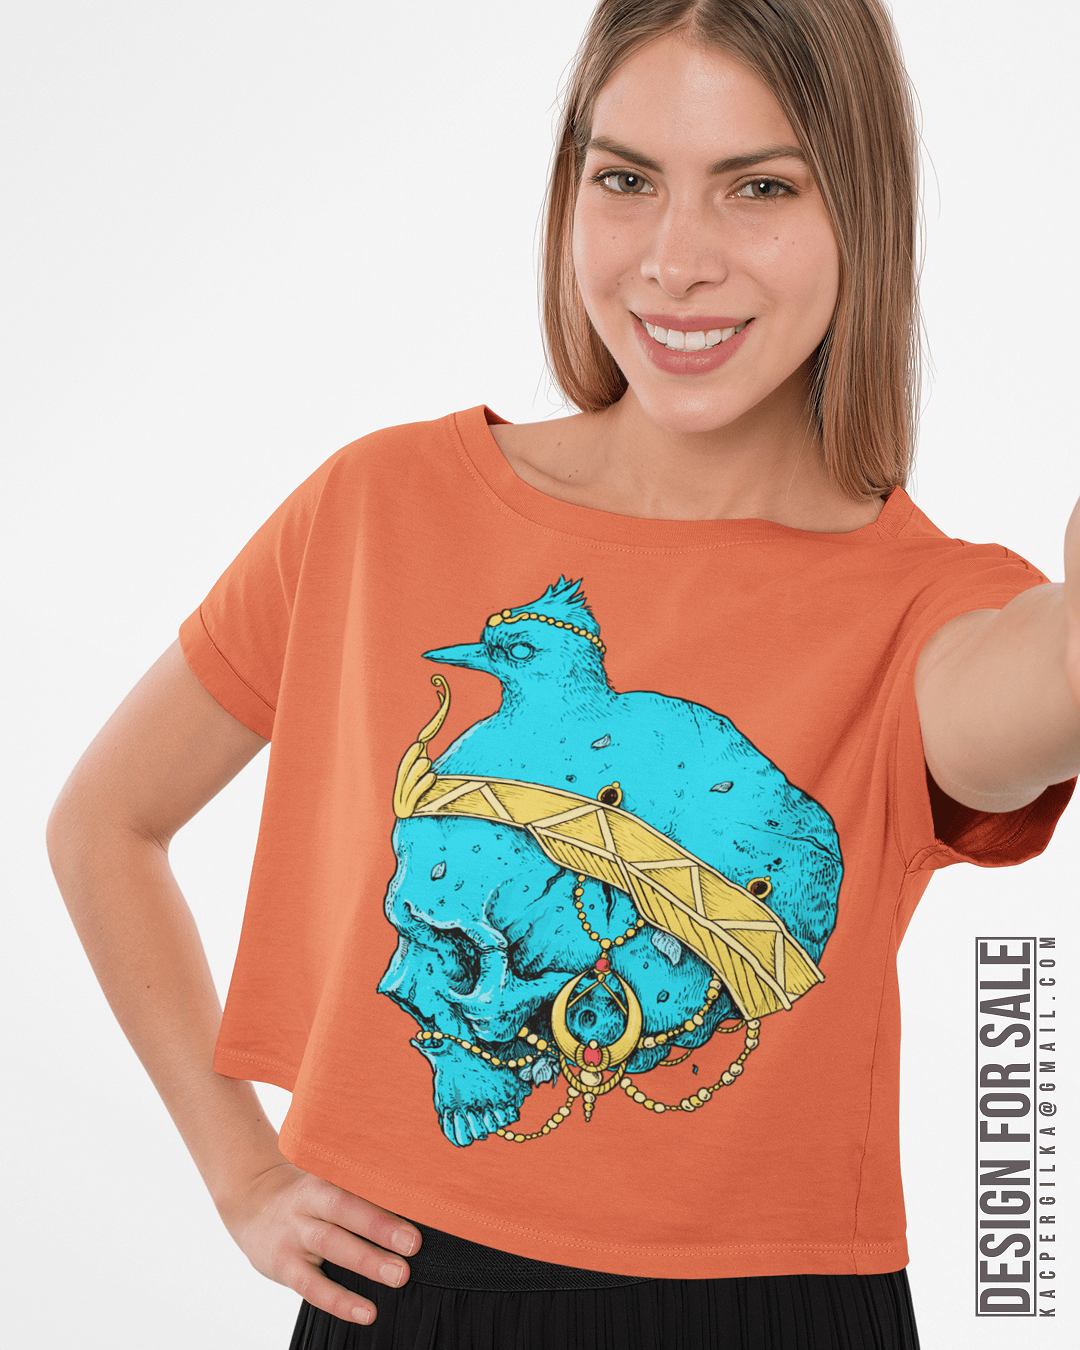 colorful comic Cover Art ILLUSTRATION  music poster sale skull surreal T-Shirt Design